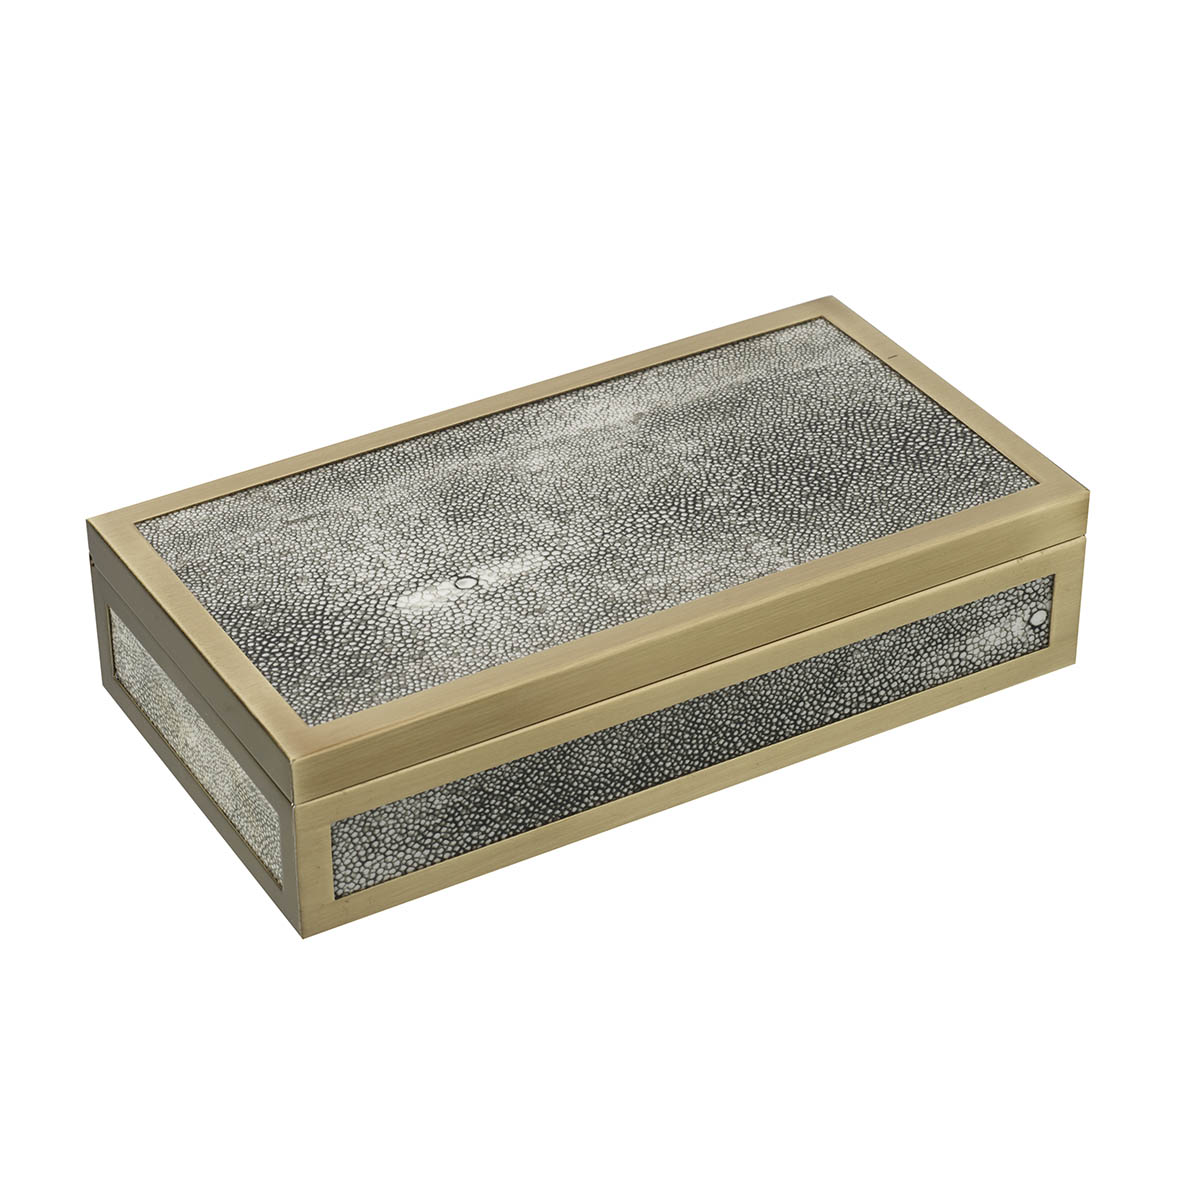 Deco box 22x12x5 cm MICHELLE JEWELRY leather grey-bronze